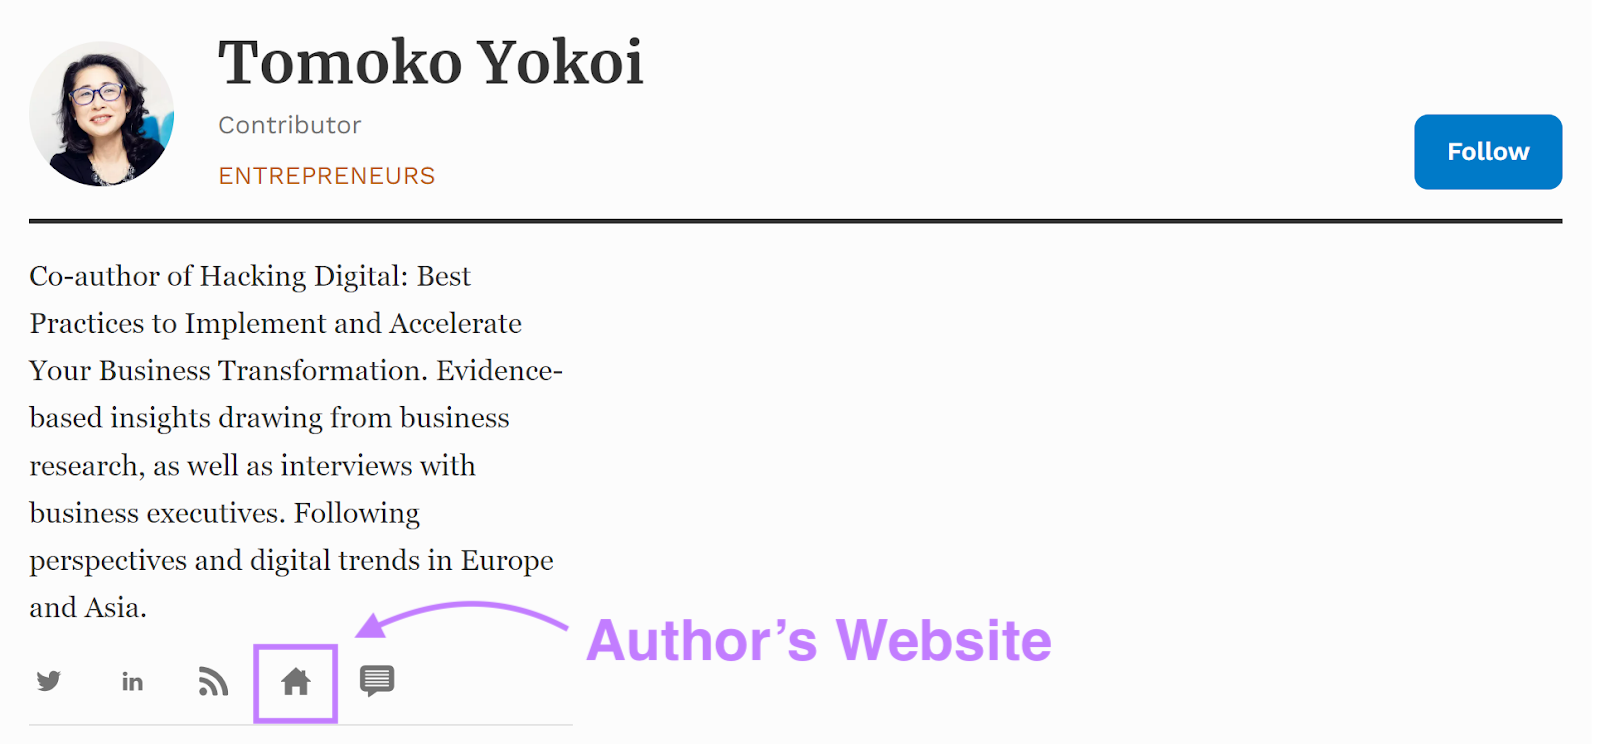 Tomoko Yokoi’s bio on Forbes